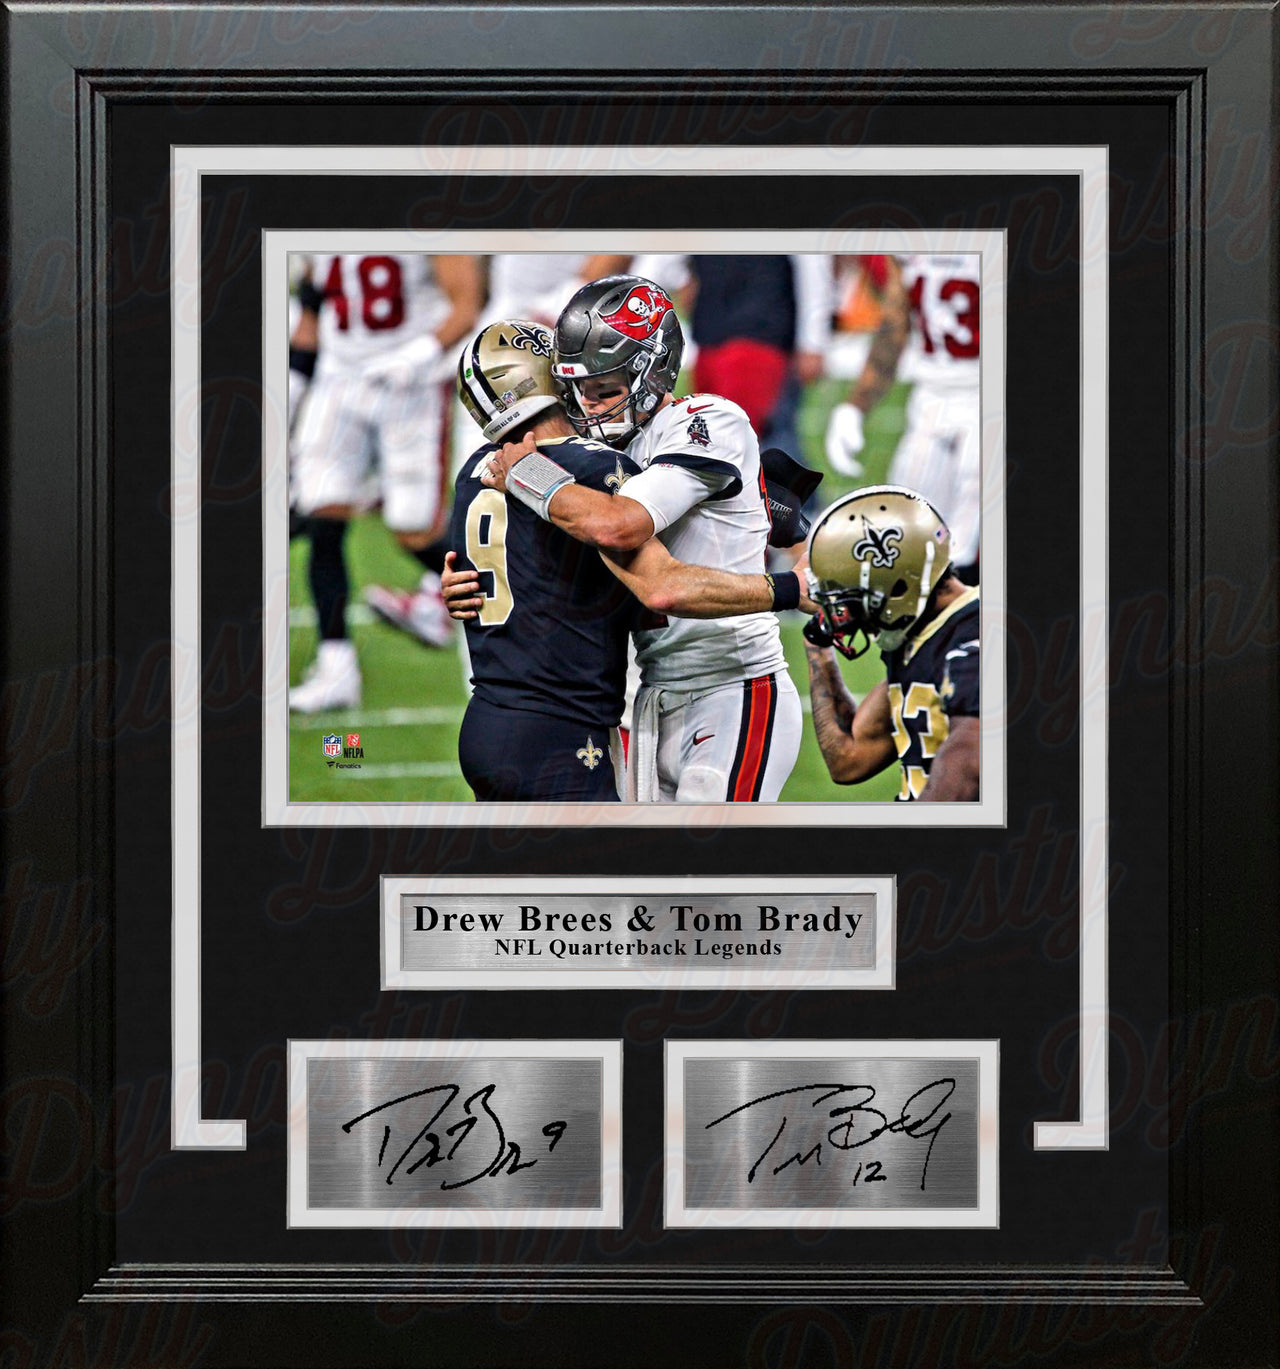 Drew Brees and Tom Brady 8" x 10" Framed Quarterback Legends Football Photo with Engraved Autographs - Dynasty Sports & Framing 